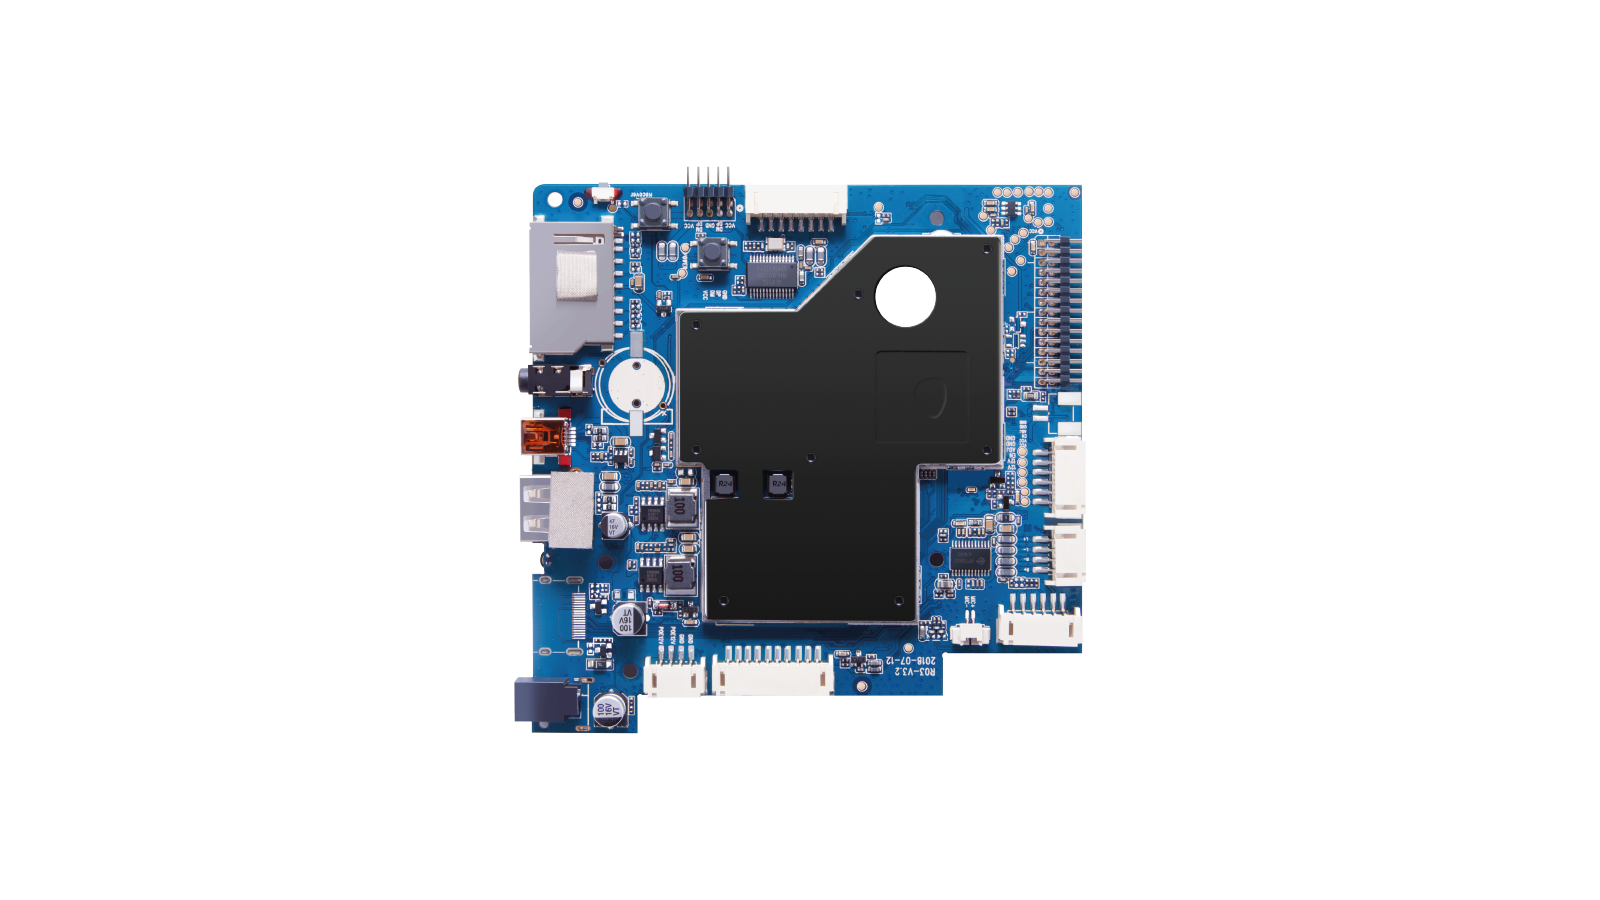 LV-Tron LVB-3566-4 embedded board using Rockchip RK-3566 chipset